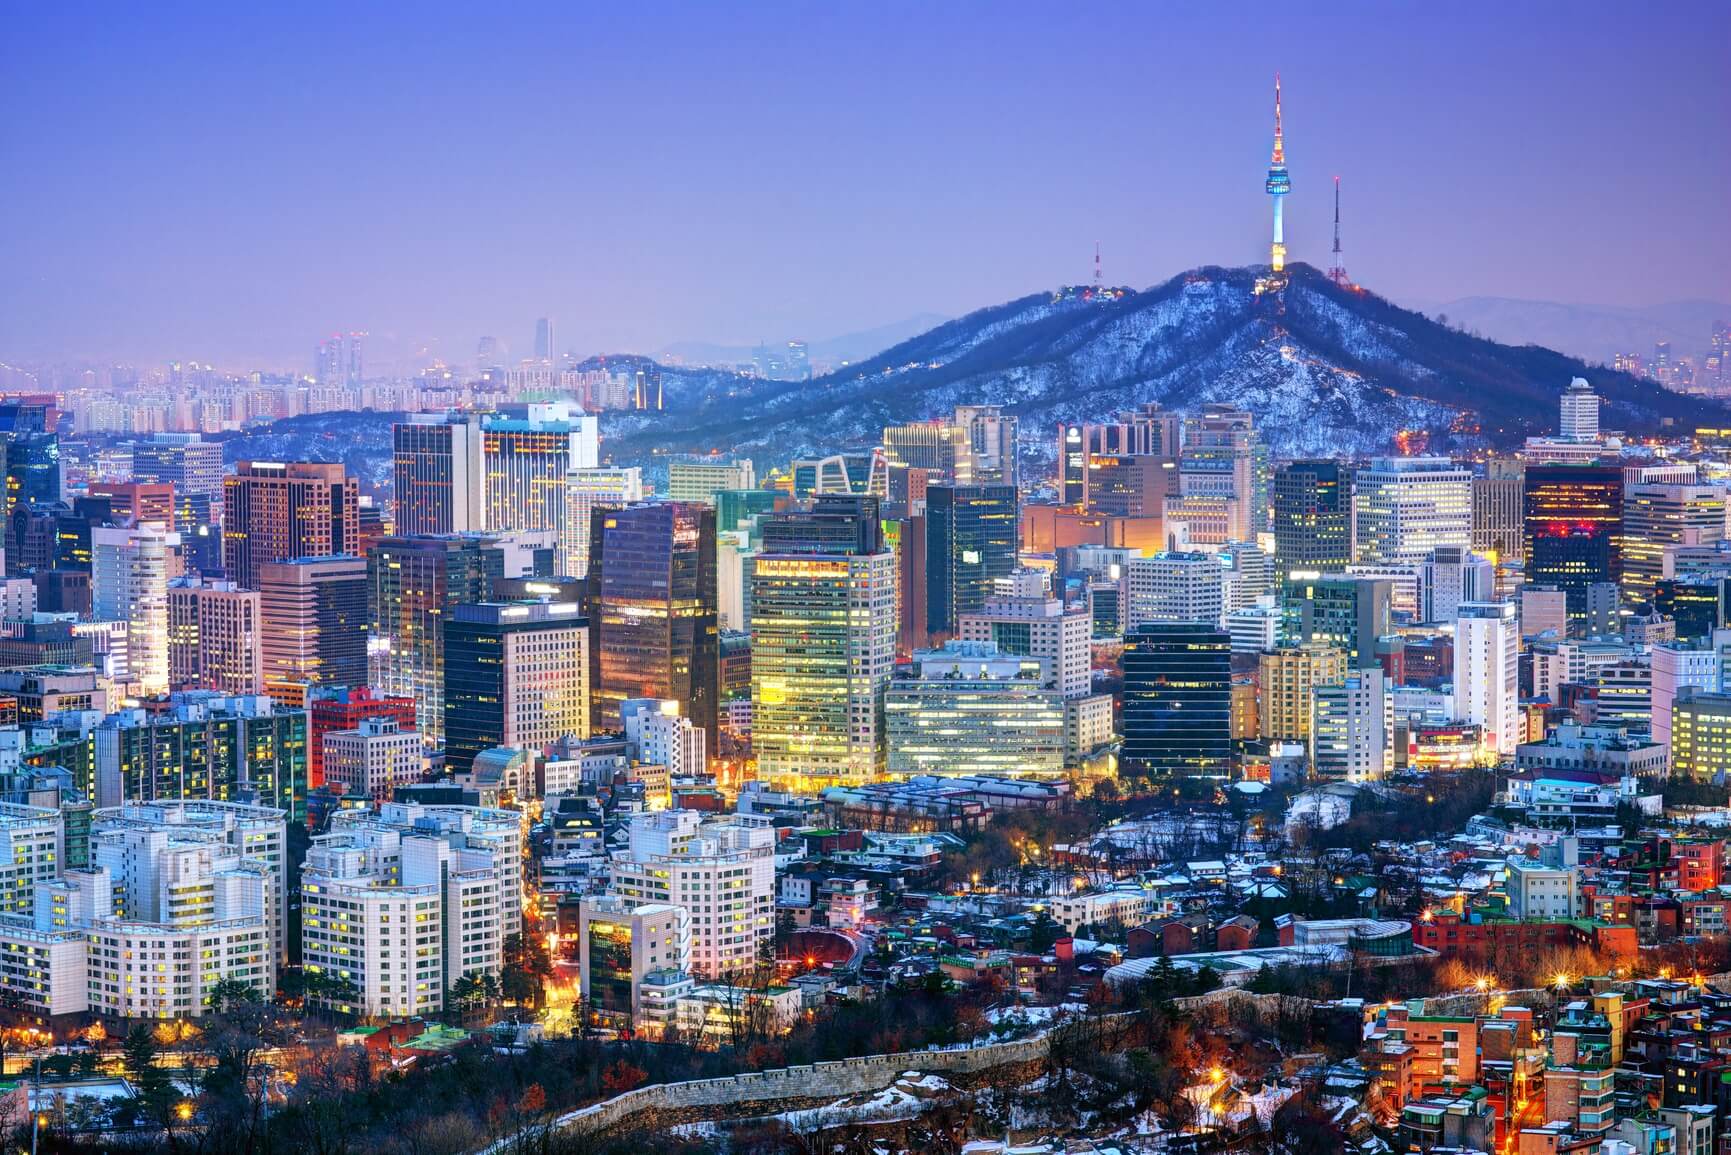 Flight deals from Sofia, Bulgaria to Seoul, South Korea | Secret Flying